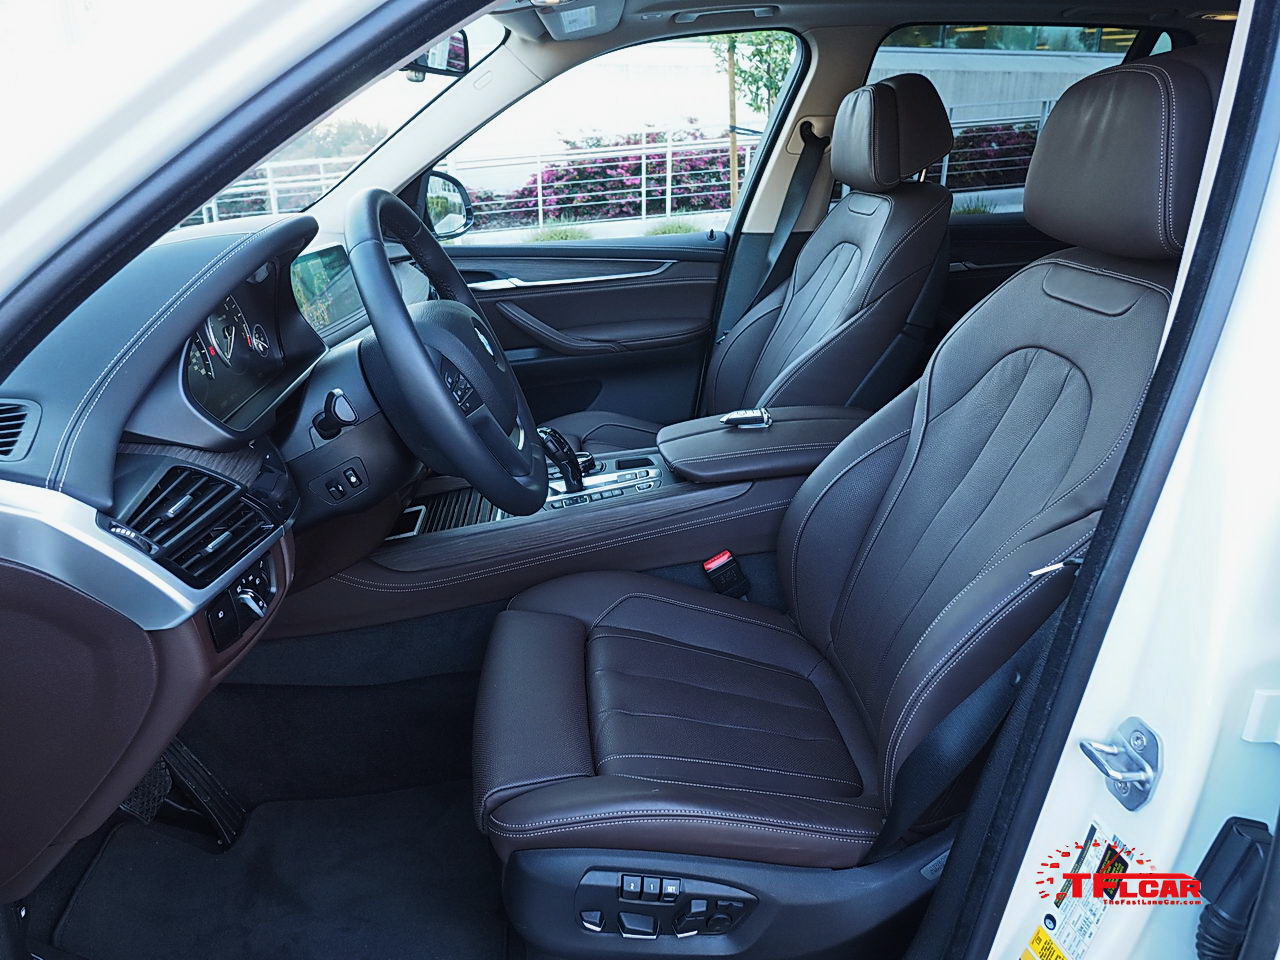 2016 BMW X5 40e front seats